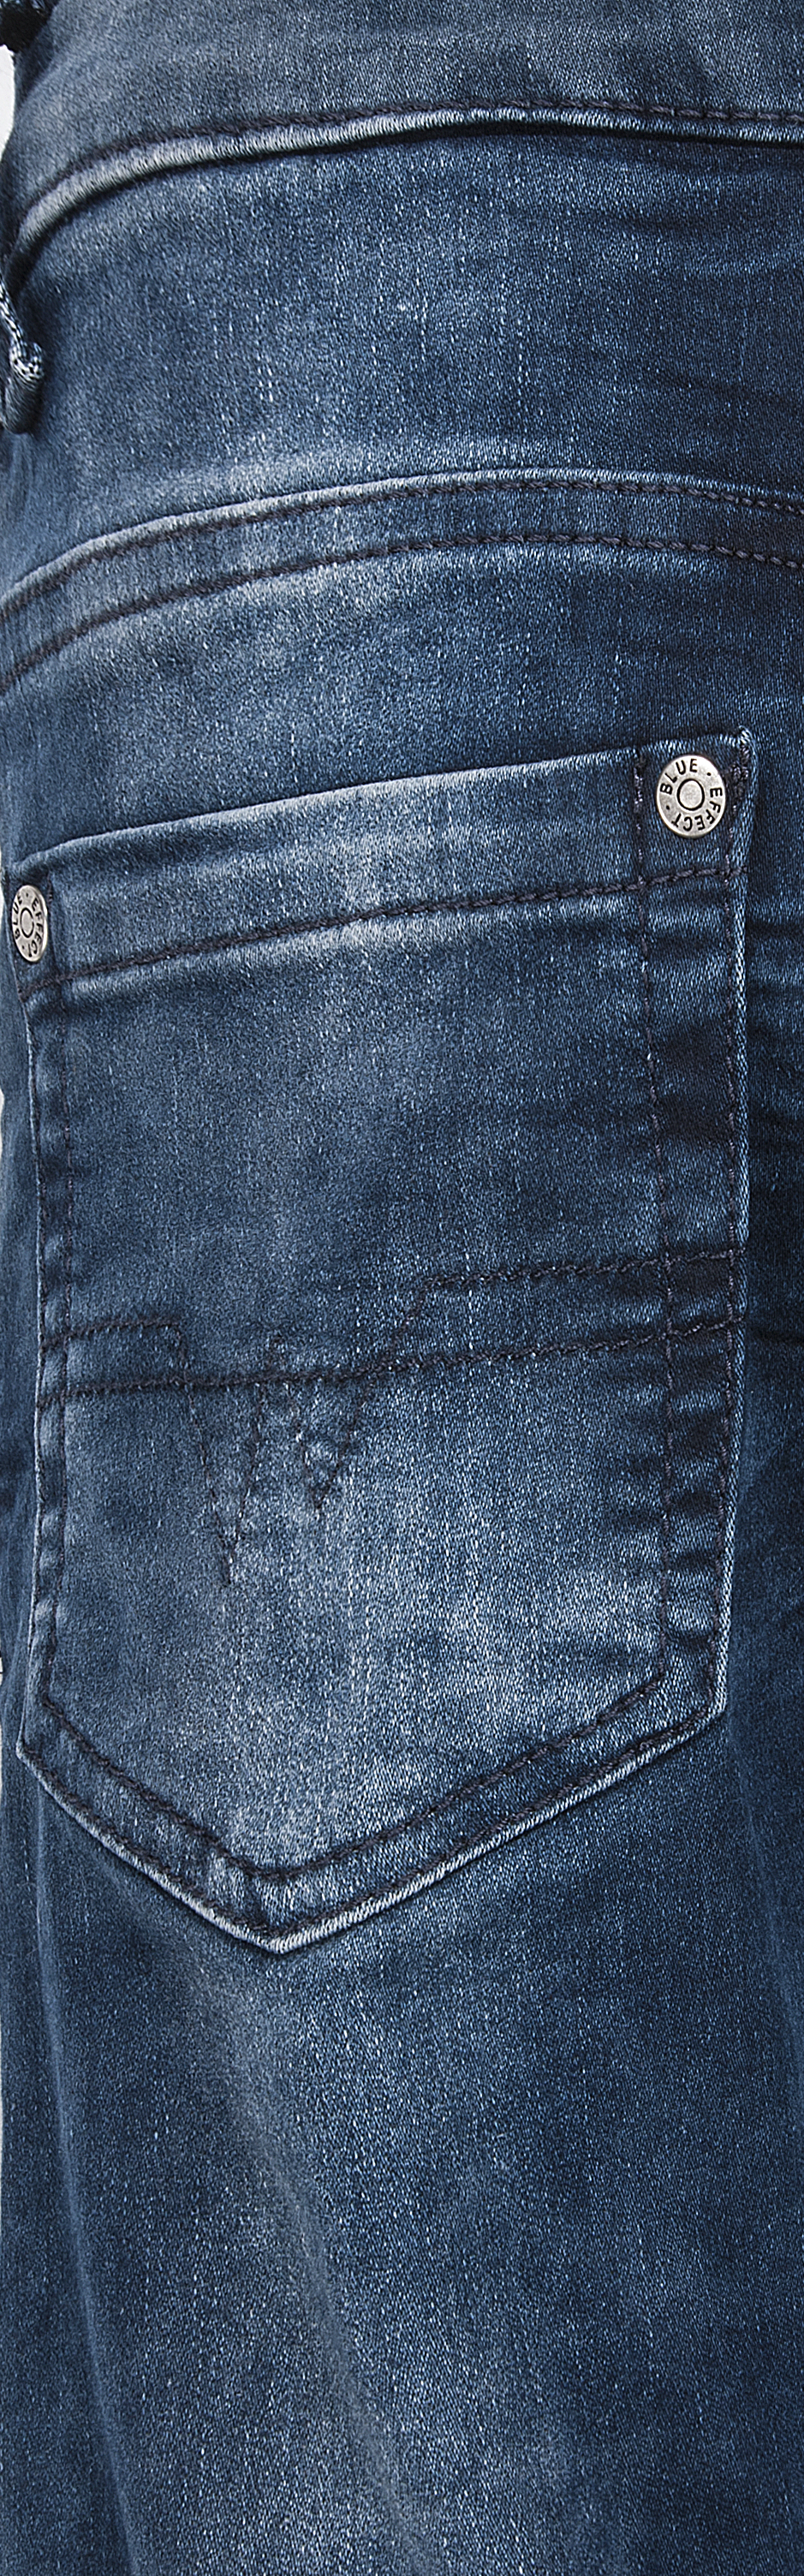 0226-NOS Boys Jeans Special Skinny, Ultrastretch, verfügbar in Slim,Normal,Wide